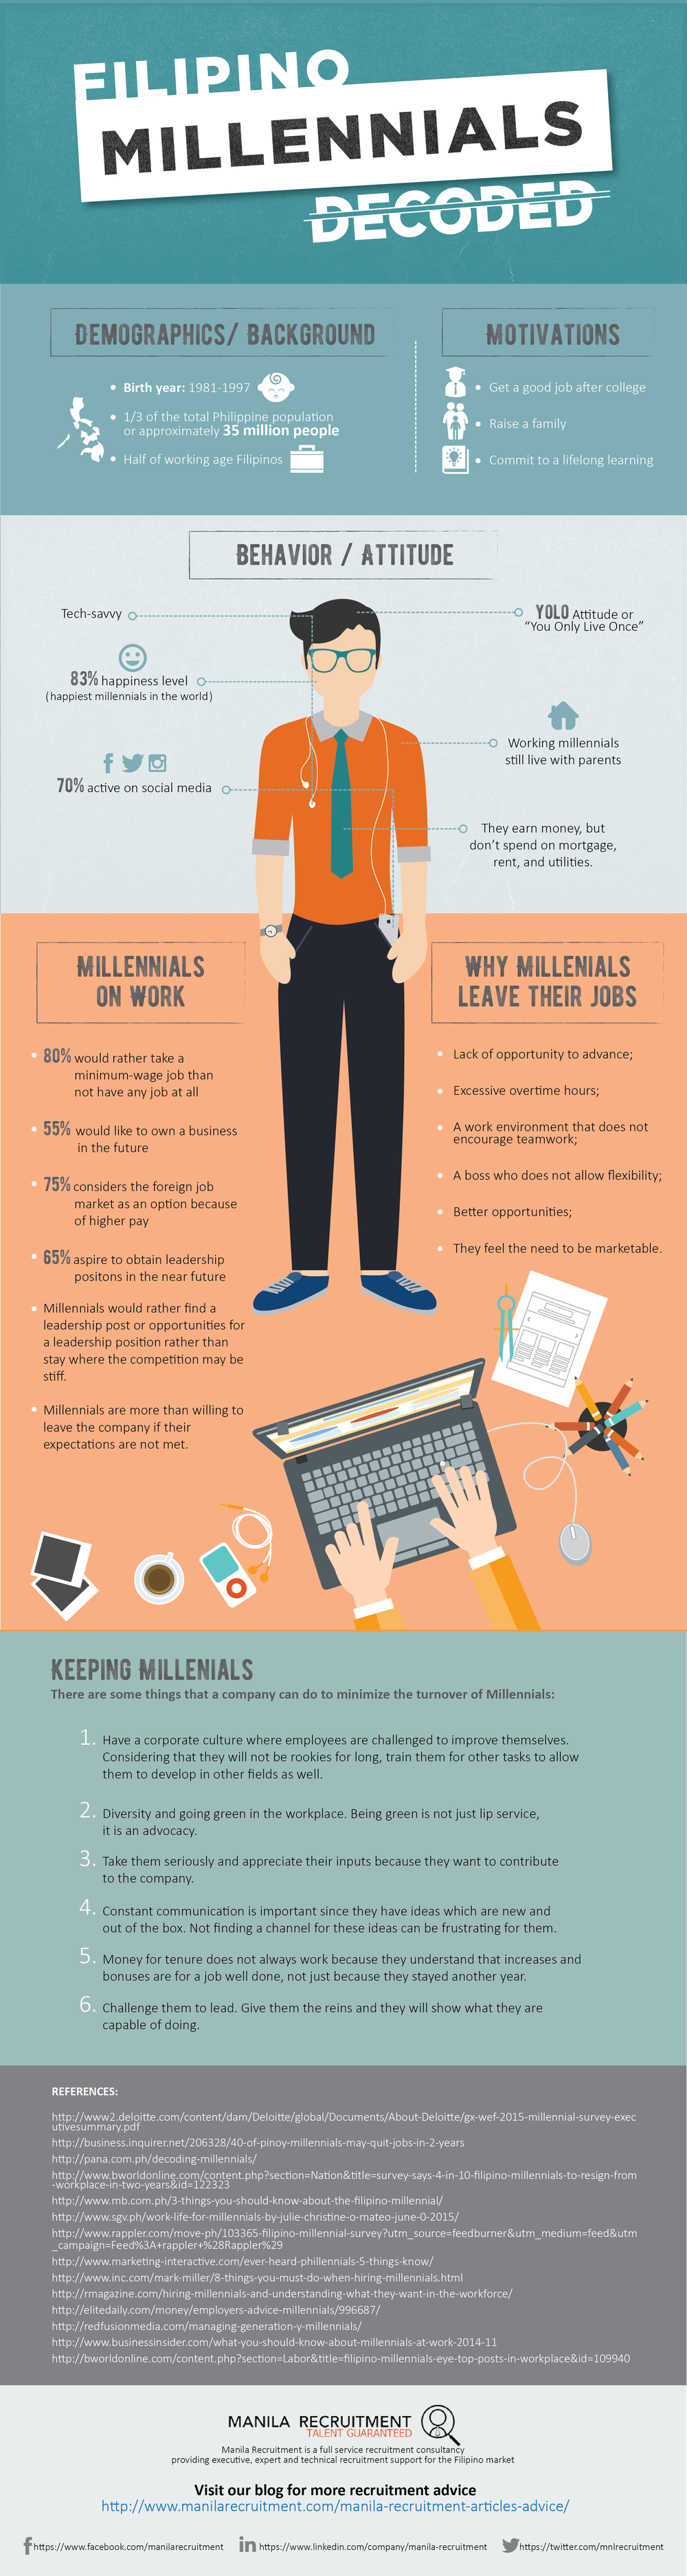 filipino_millennials_decoded_infographic